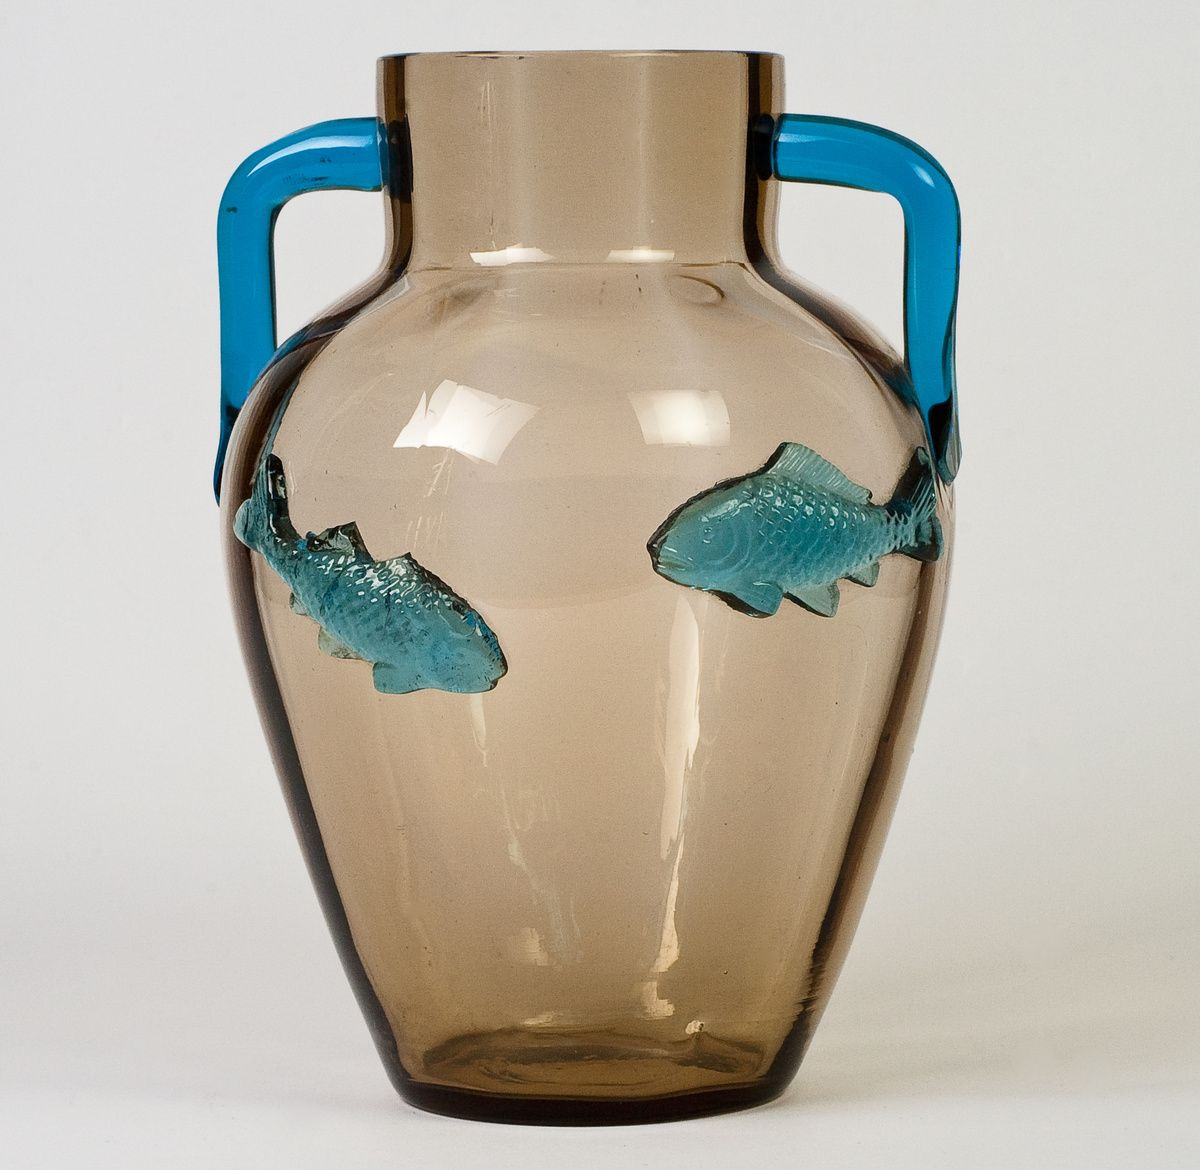 15 Unique Blue Glass Stones for Vases 2024 free download blue glass stones for vases of harrach fish vase isnt the design amazing the fun in collecting pertaining to harrach fish vase isnt the design amazing